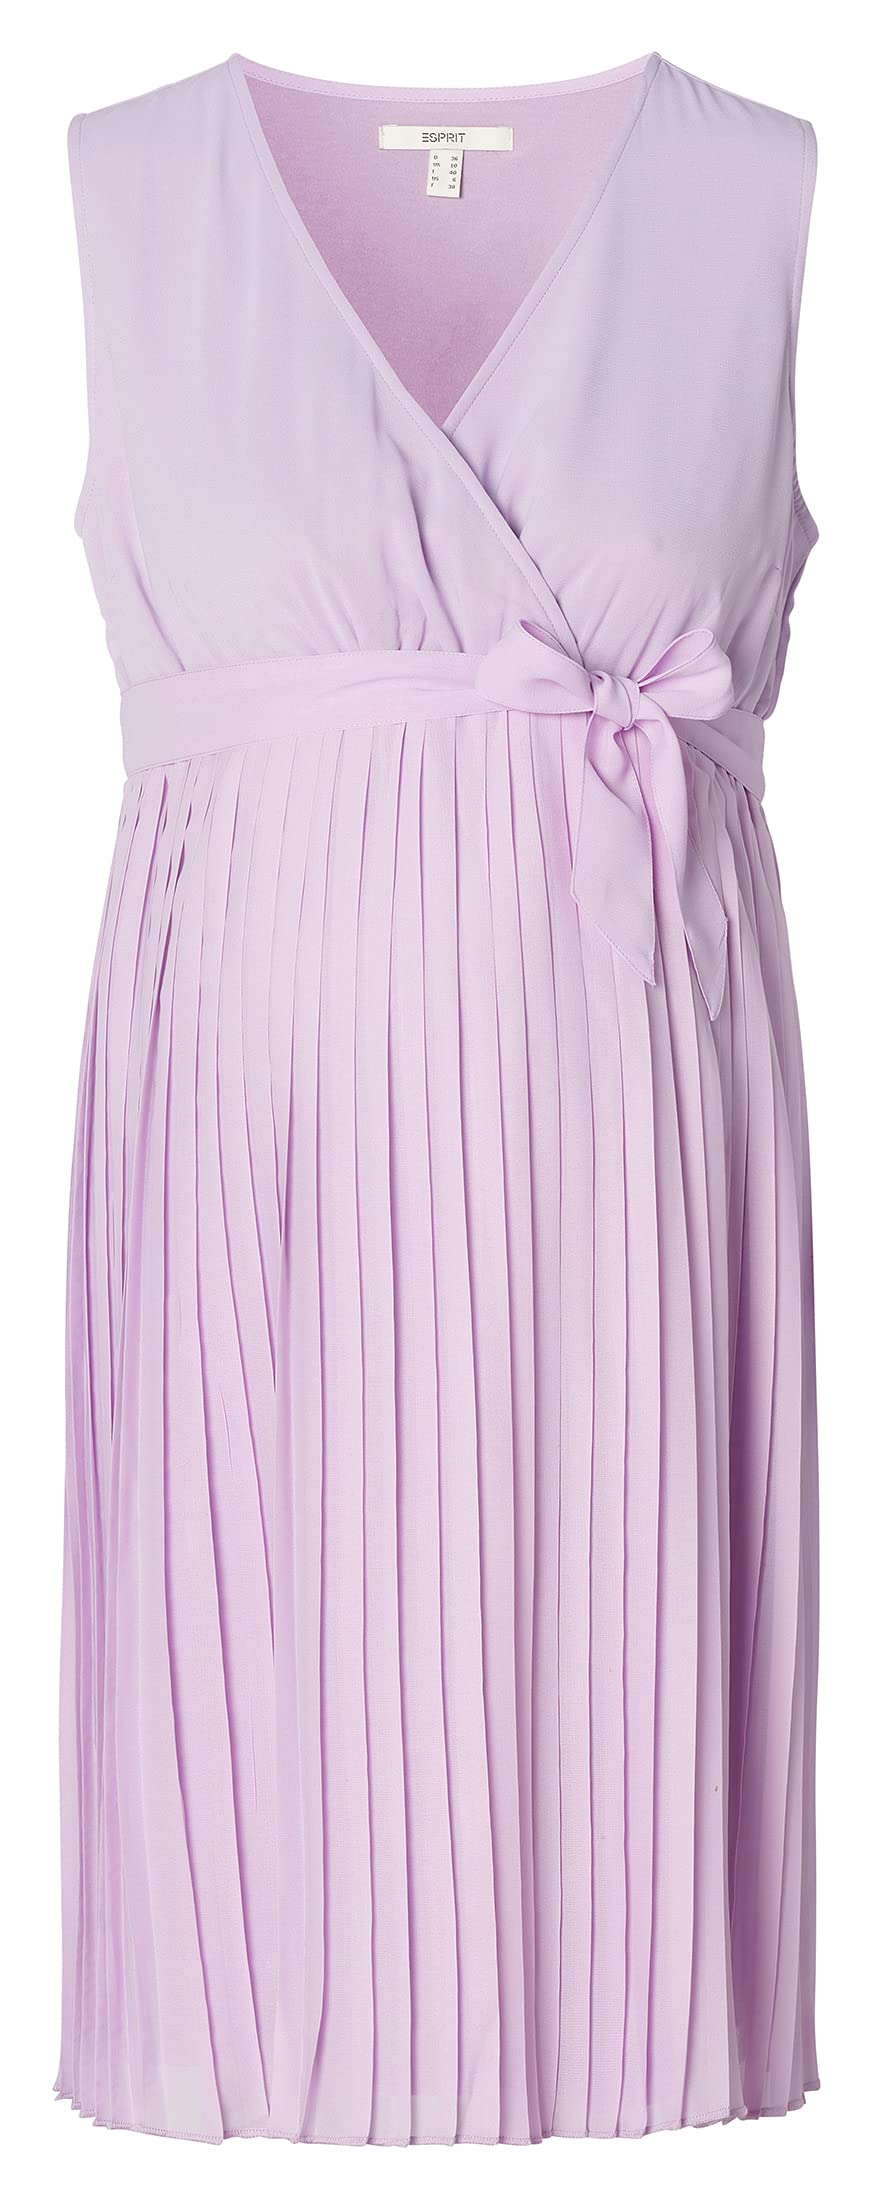 ESPRIT Damen Dress Woven Sleeveless Kleid, Pale Purple-506, 38